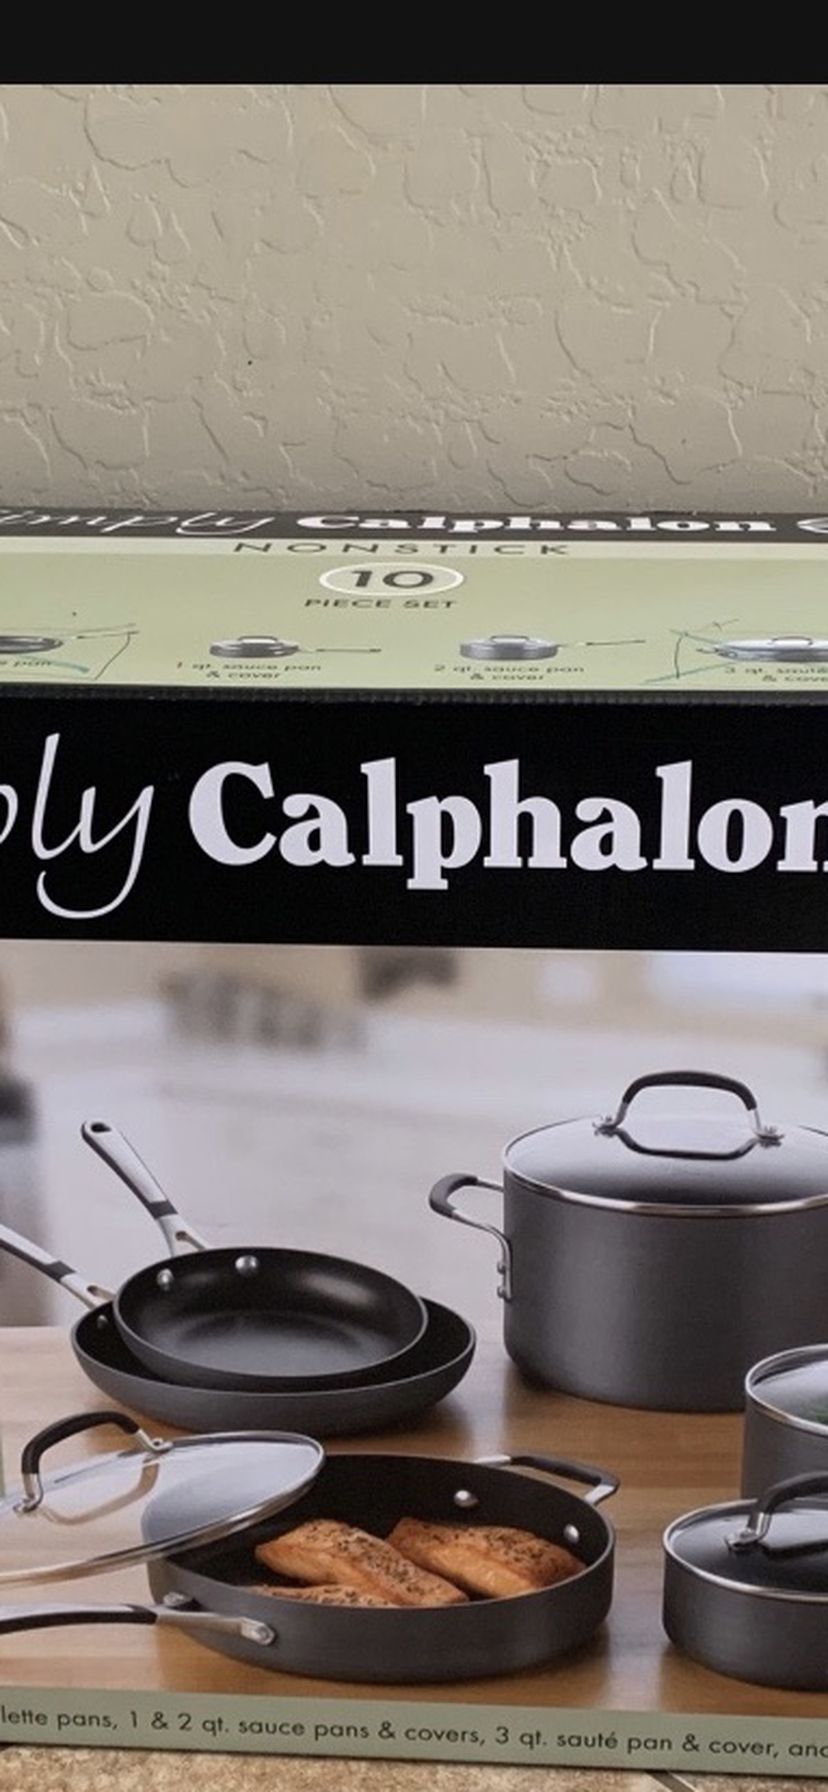 Simply Calphalon Hard-Anodized Nonstick 10-Piece Cookware Set